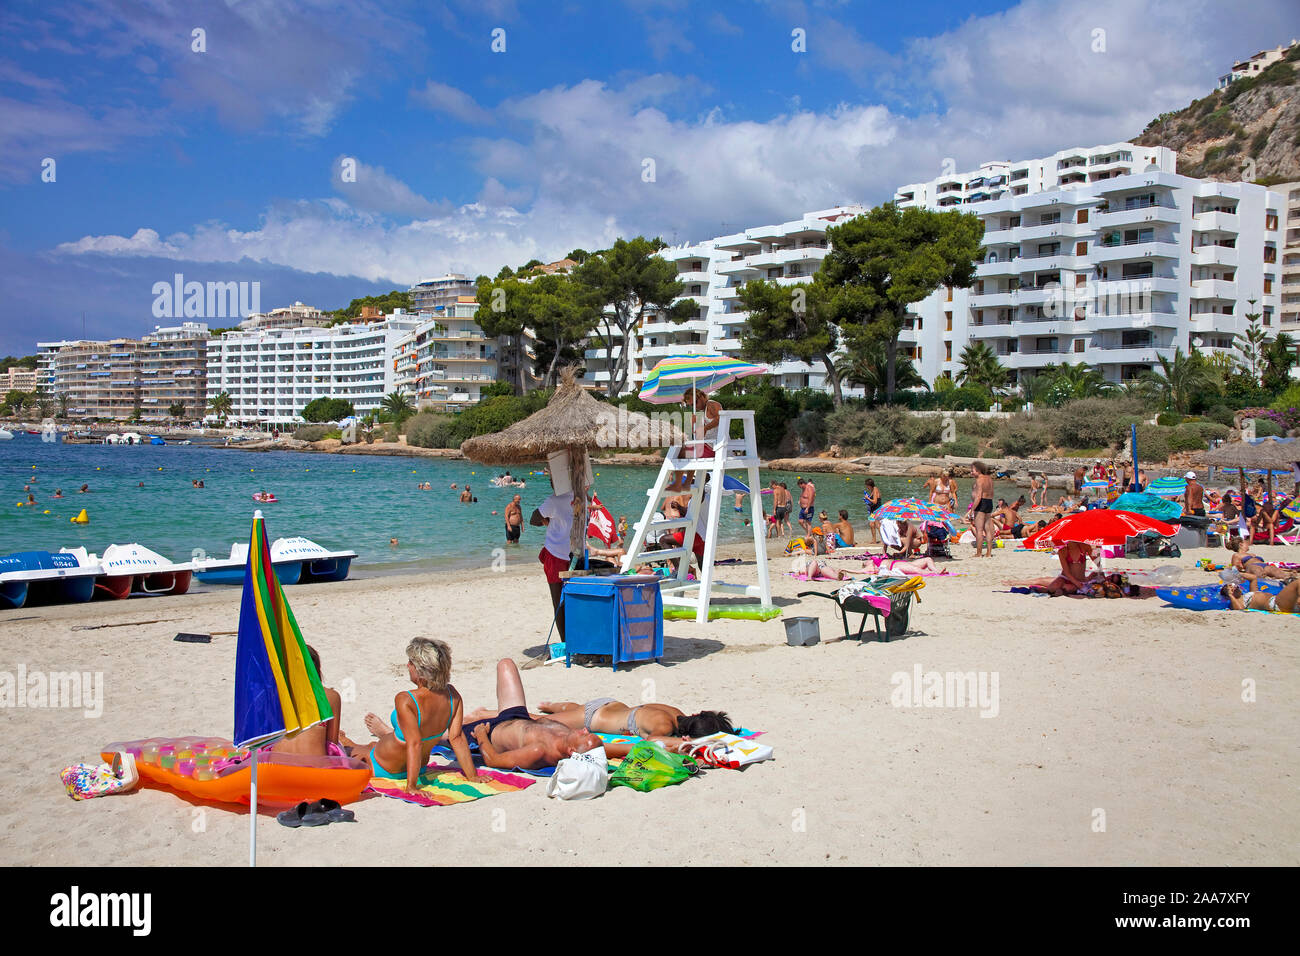 Playa en Santa Ponca, Mallorca, Islas Baearic, España Foto de stock